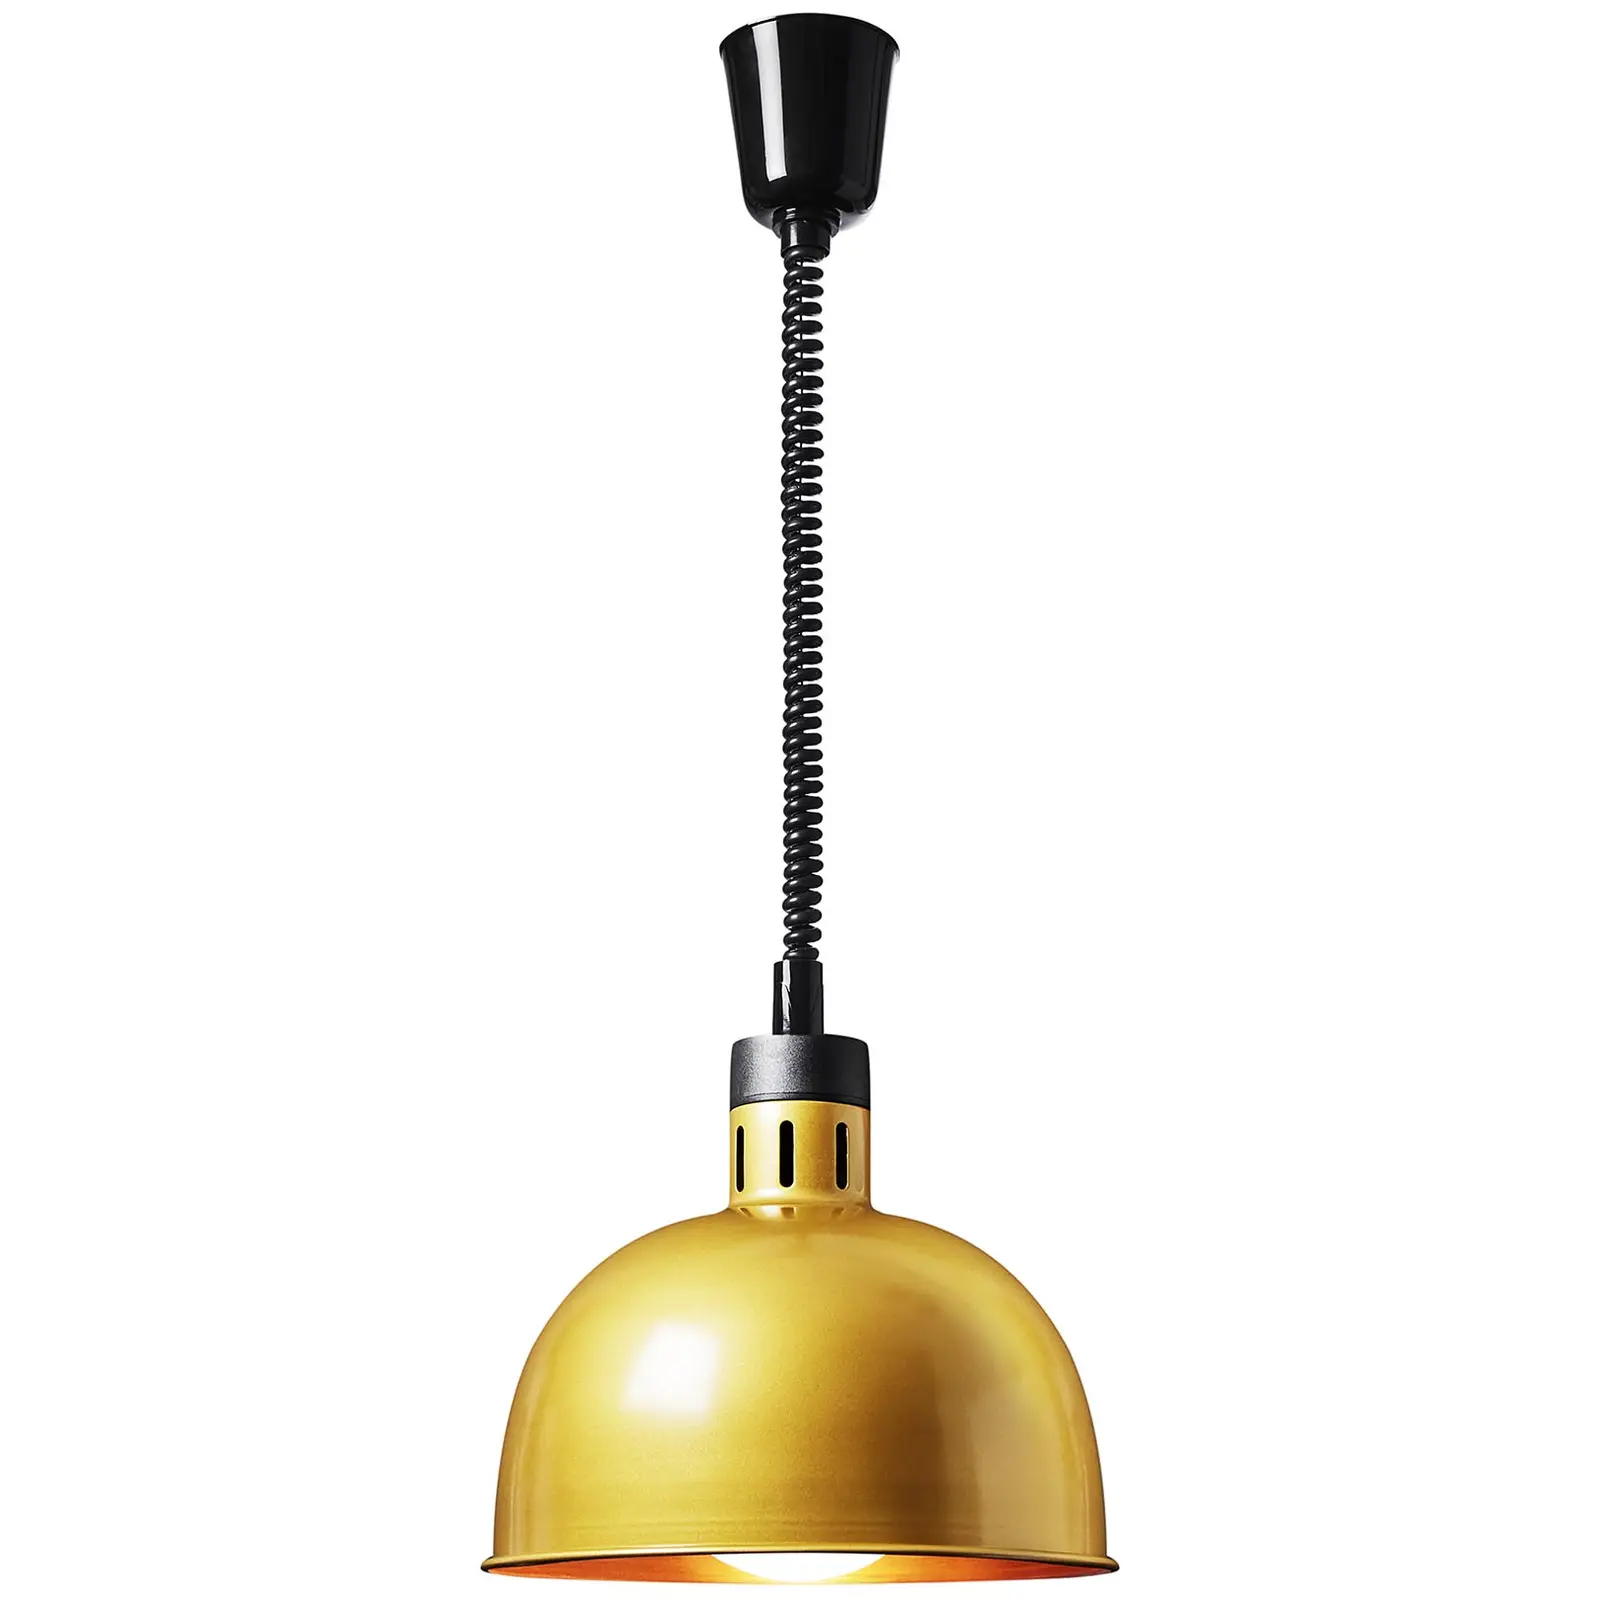 Lampada riscaldante - oro pallido - 29 x 29 x 29.5 cm  - acciaio - regolabile in altezza